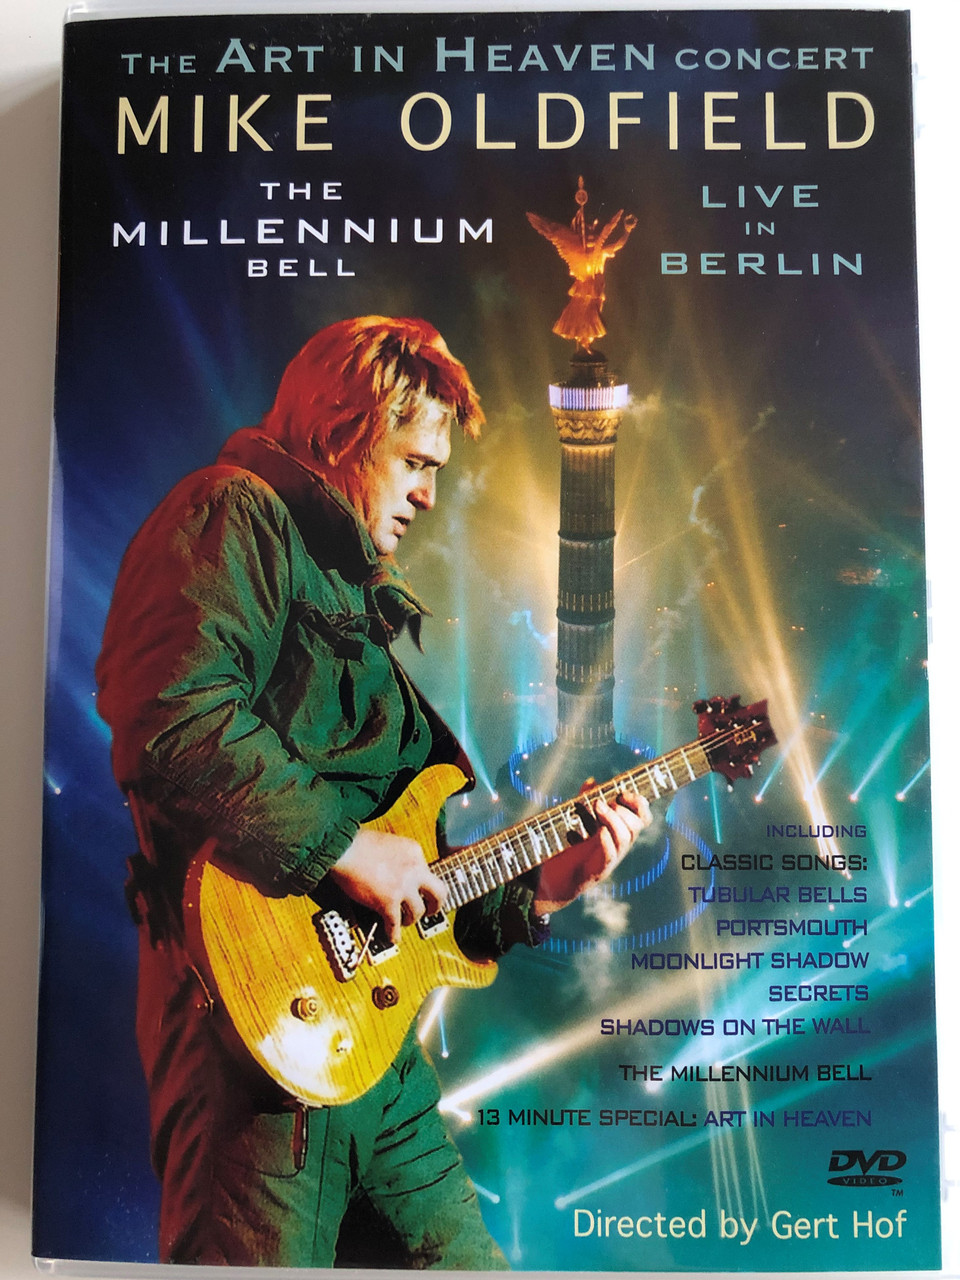 Mike Oldfield - The Art in Heaven Concert DVD The Millenium Bell / Live in  Berlin / Directed by Gert Hof / Classic Songs: Tubular Bells, Portsmouth, Moonlight  Shadow / 13 minute Special: Art in Heaven - bibleinmylanguage